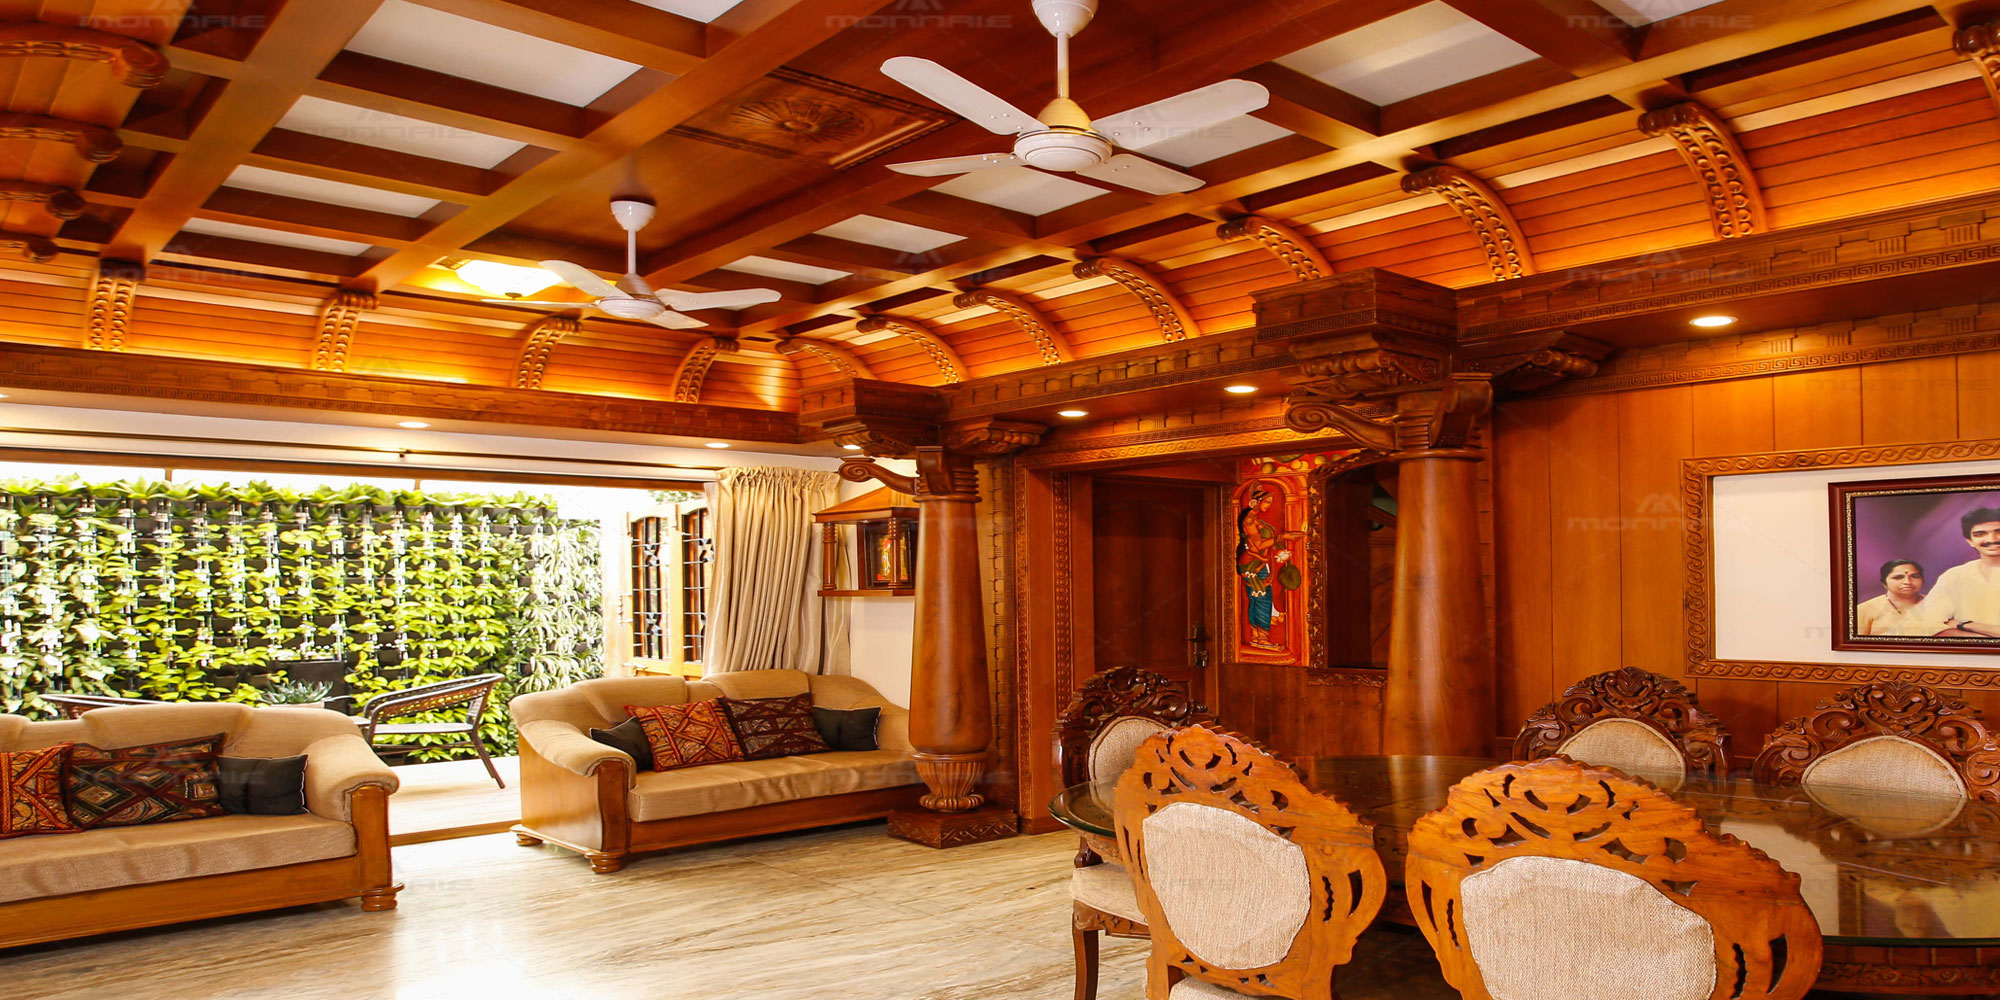 Kerala style home interior design ideas pictures Windows & door designs